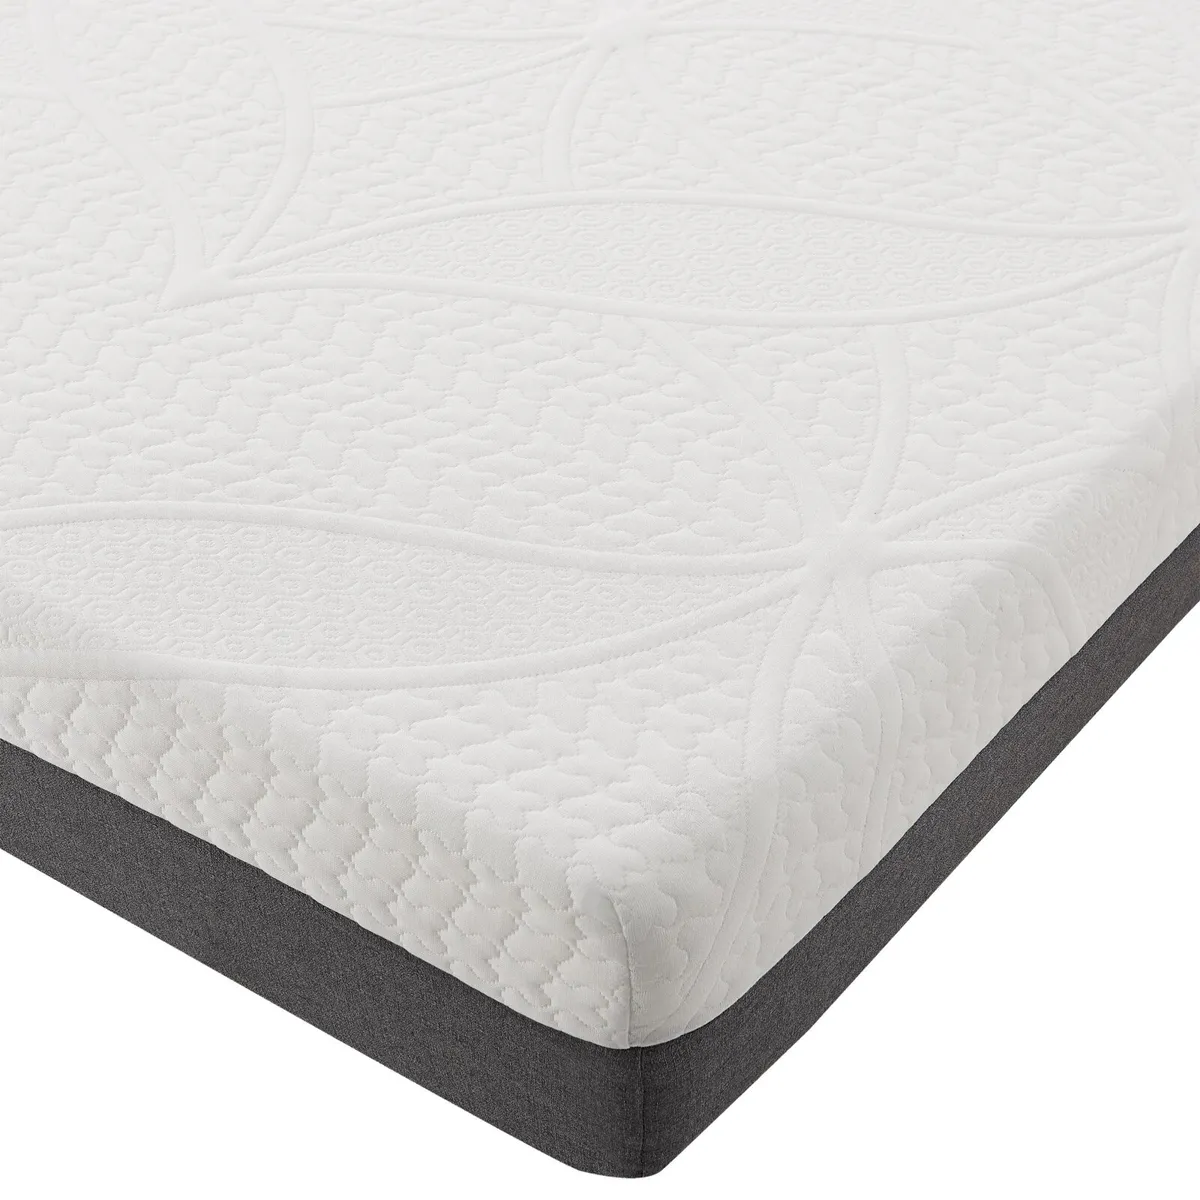 Main picture foam mattress with zipper €135 - Image 1